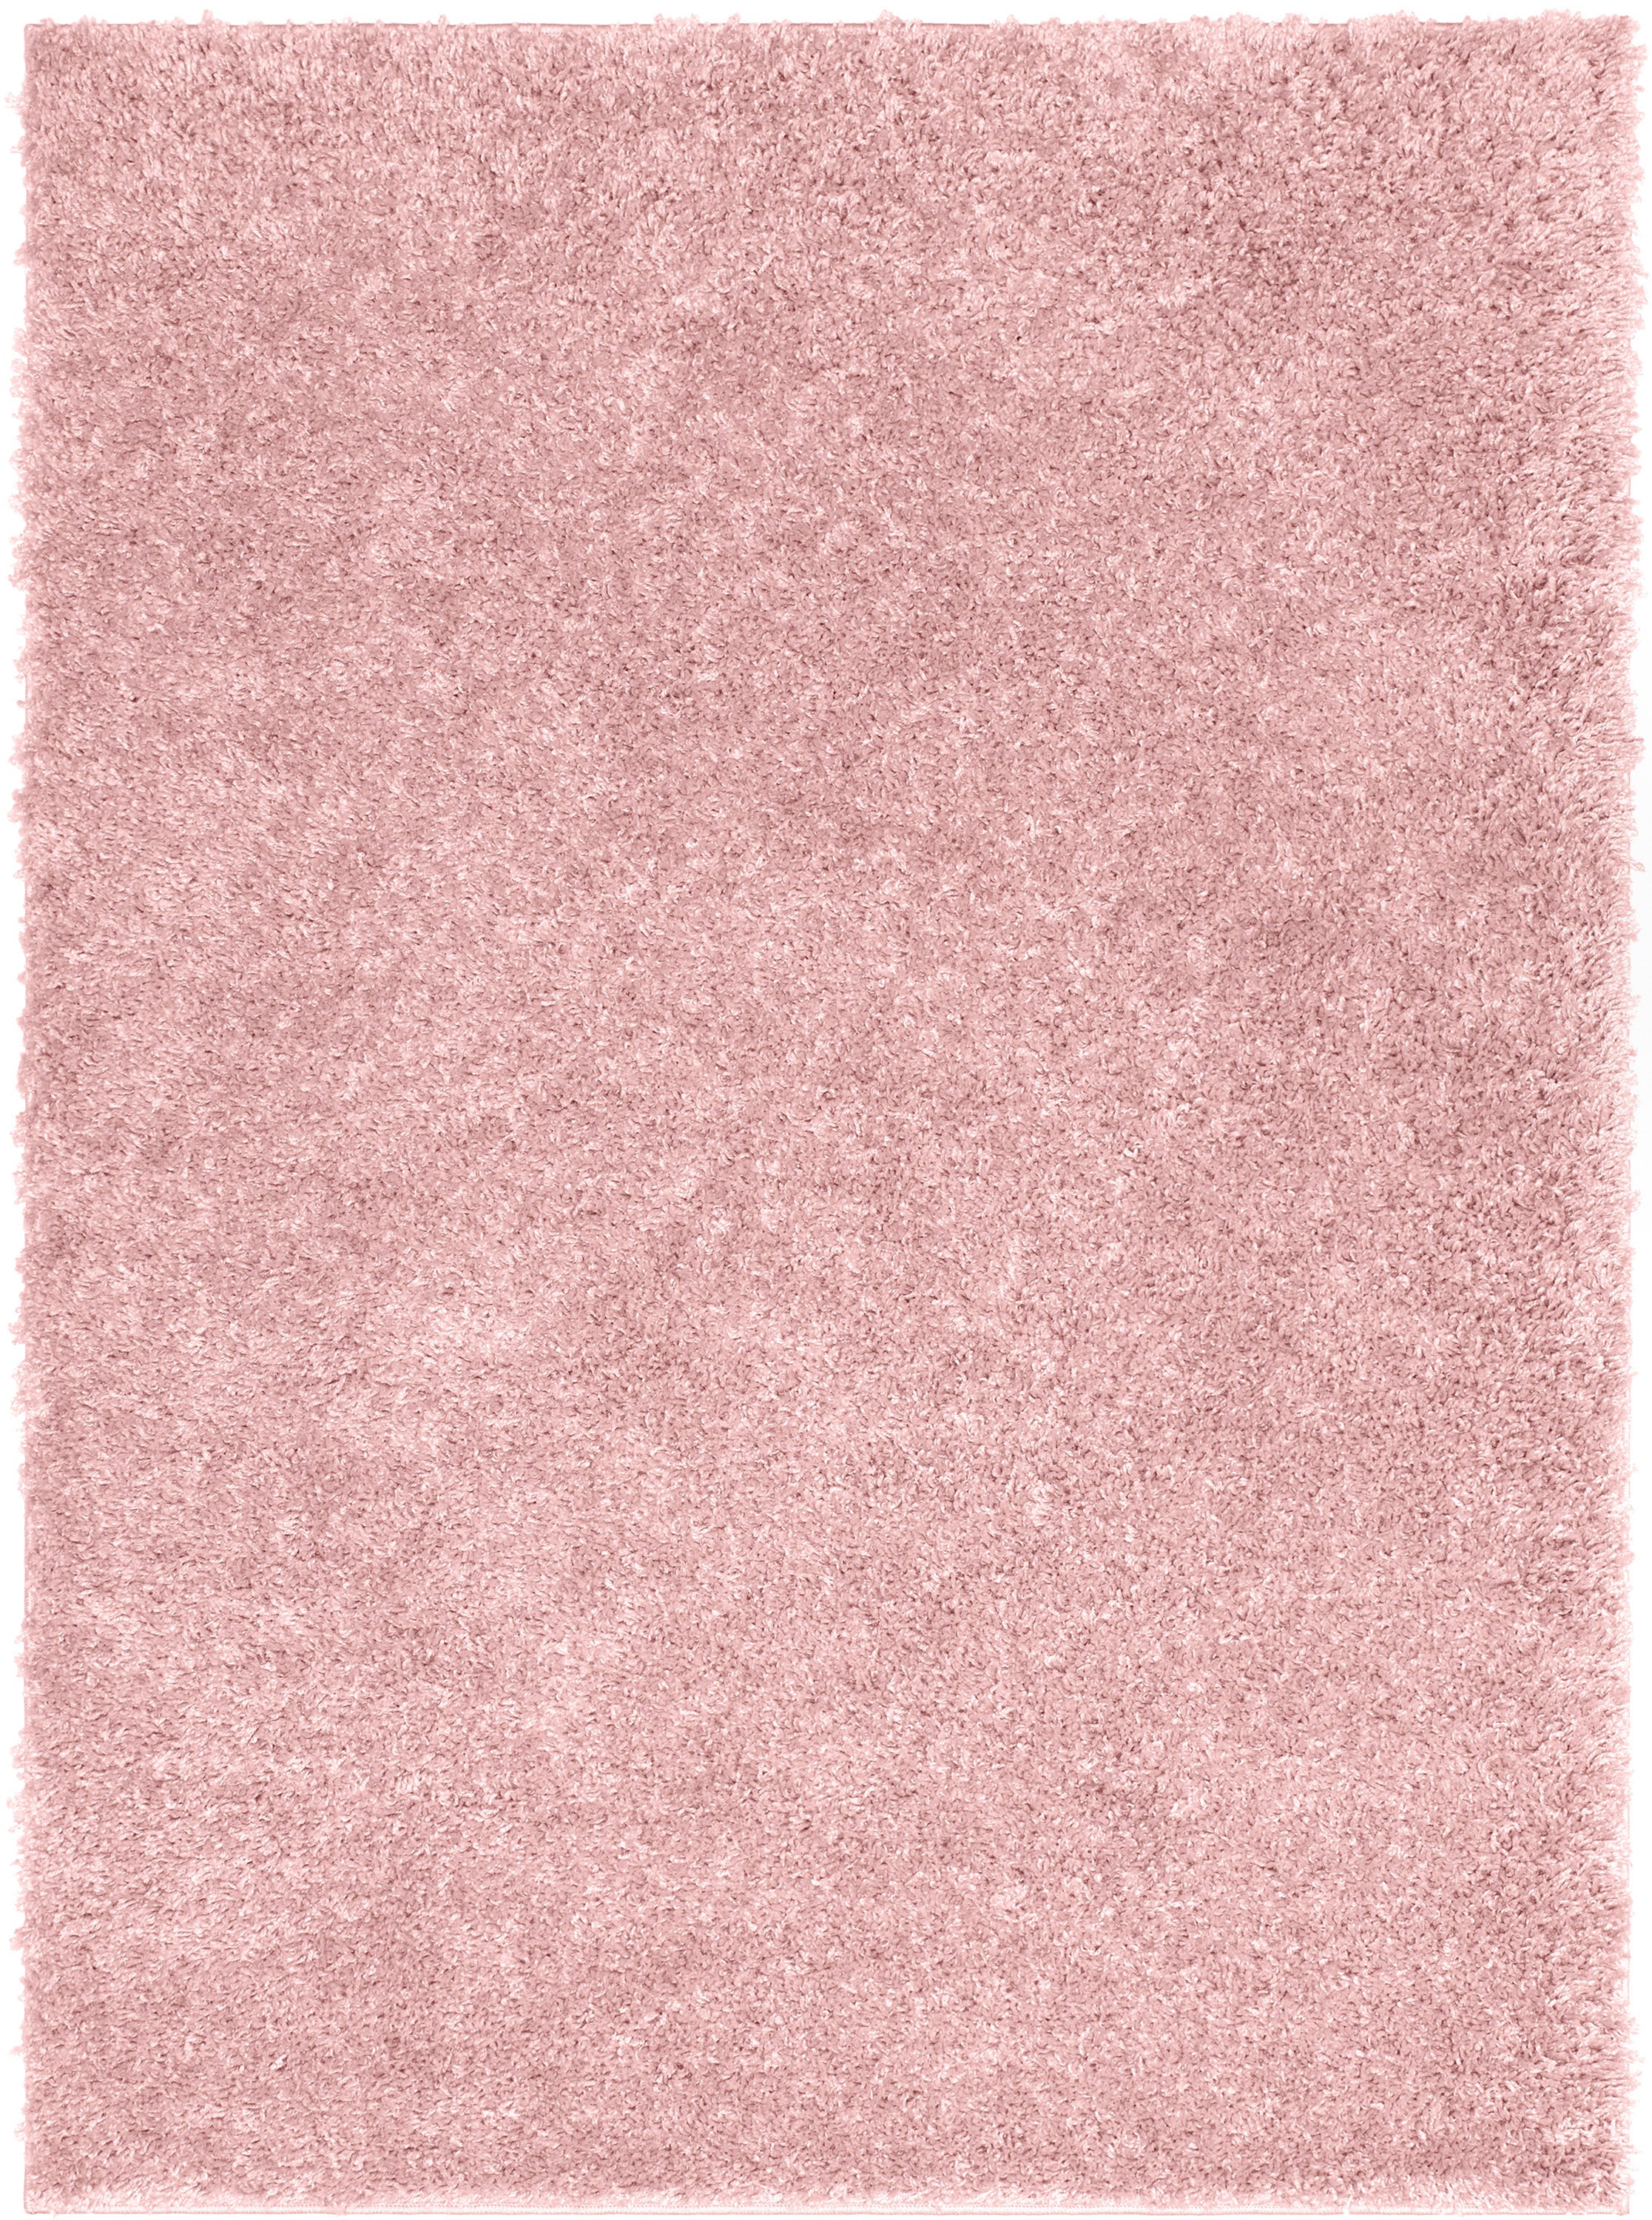 Emerson Modern Solid Pink Textured Shag Rug